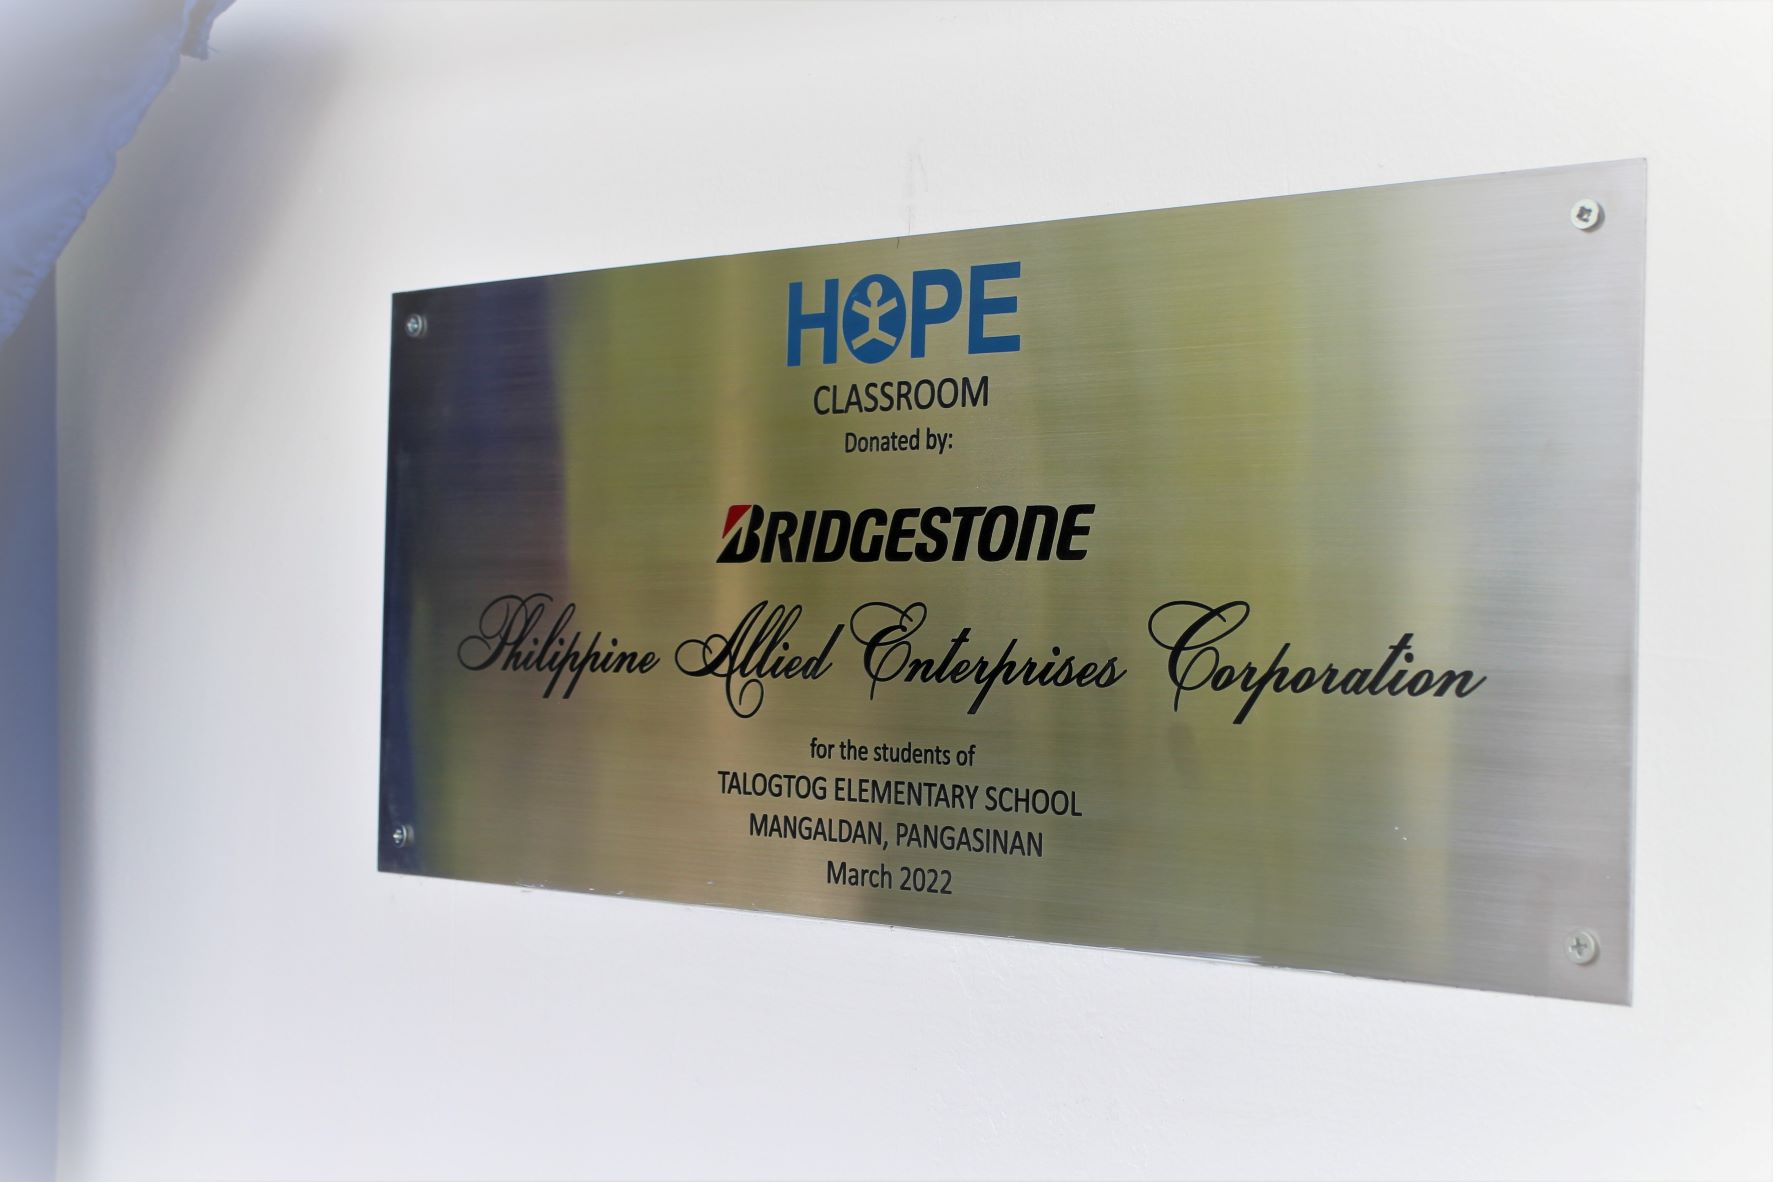 HOPE Classroom donated by Bridgestone - Philippine Allied Enterprises Corporation for  the students of Talogtog Elementary School Mangaldan Pangasinan March 2022